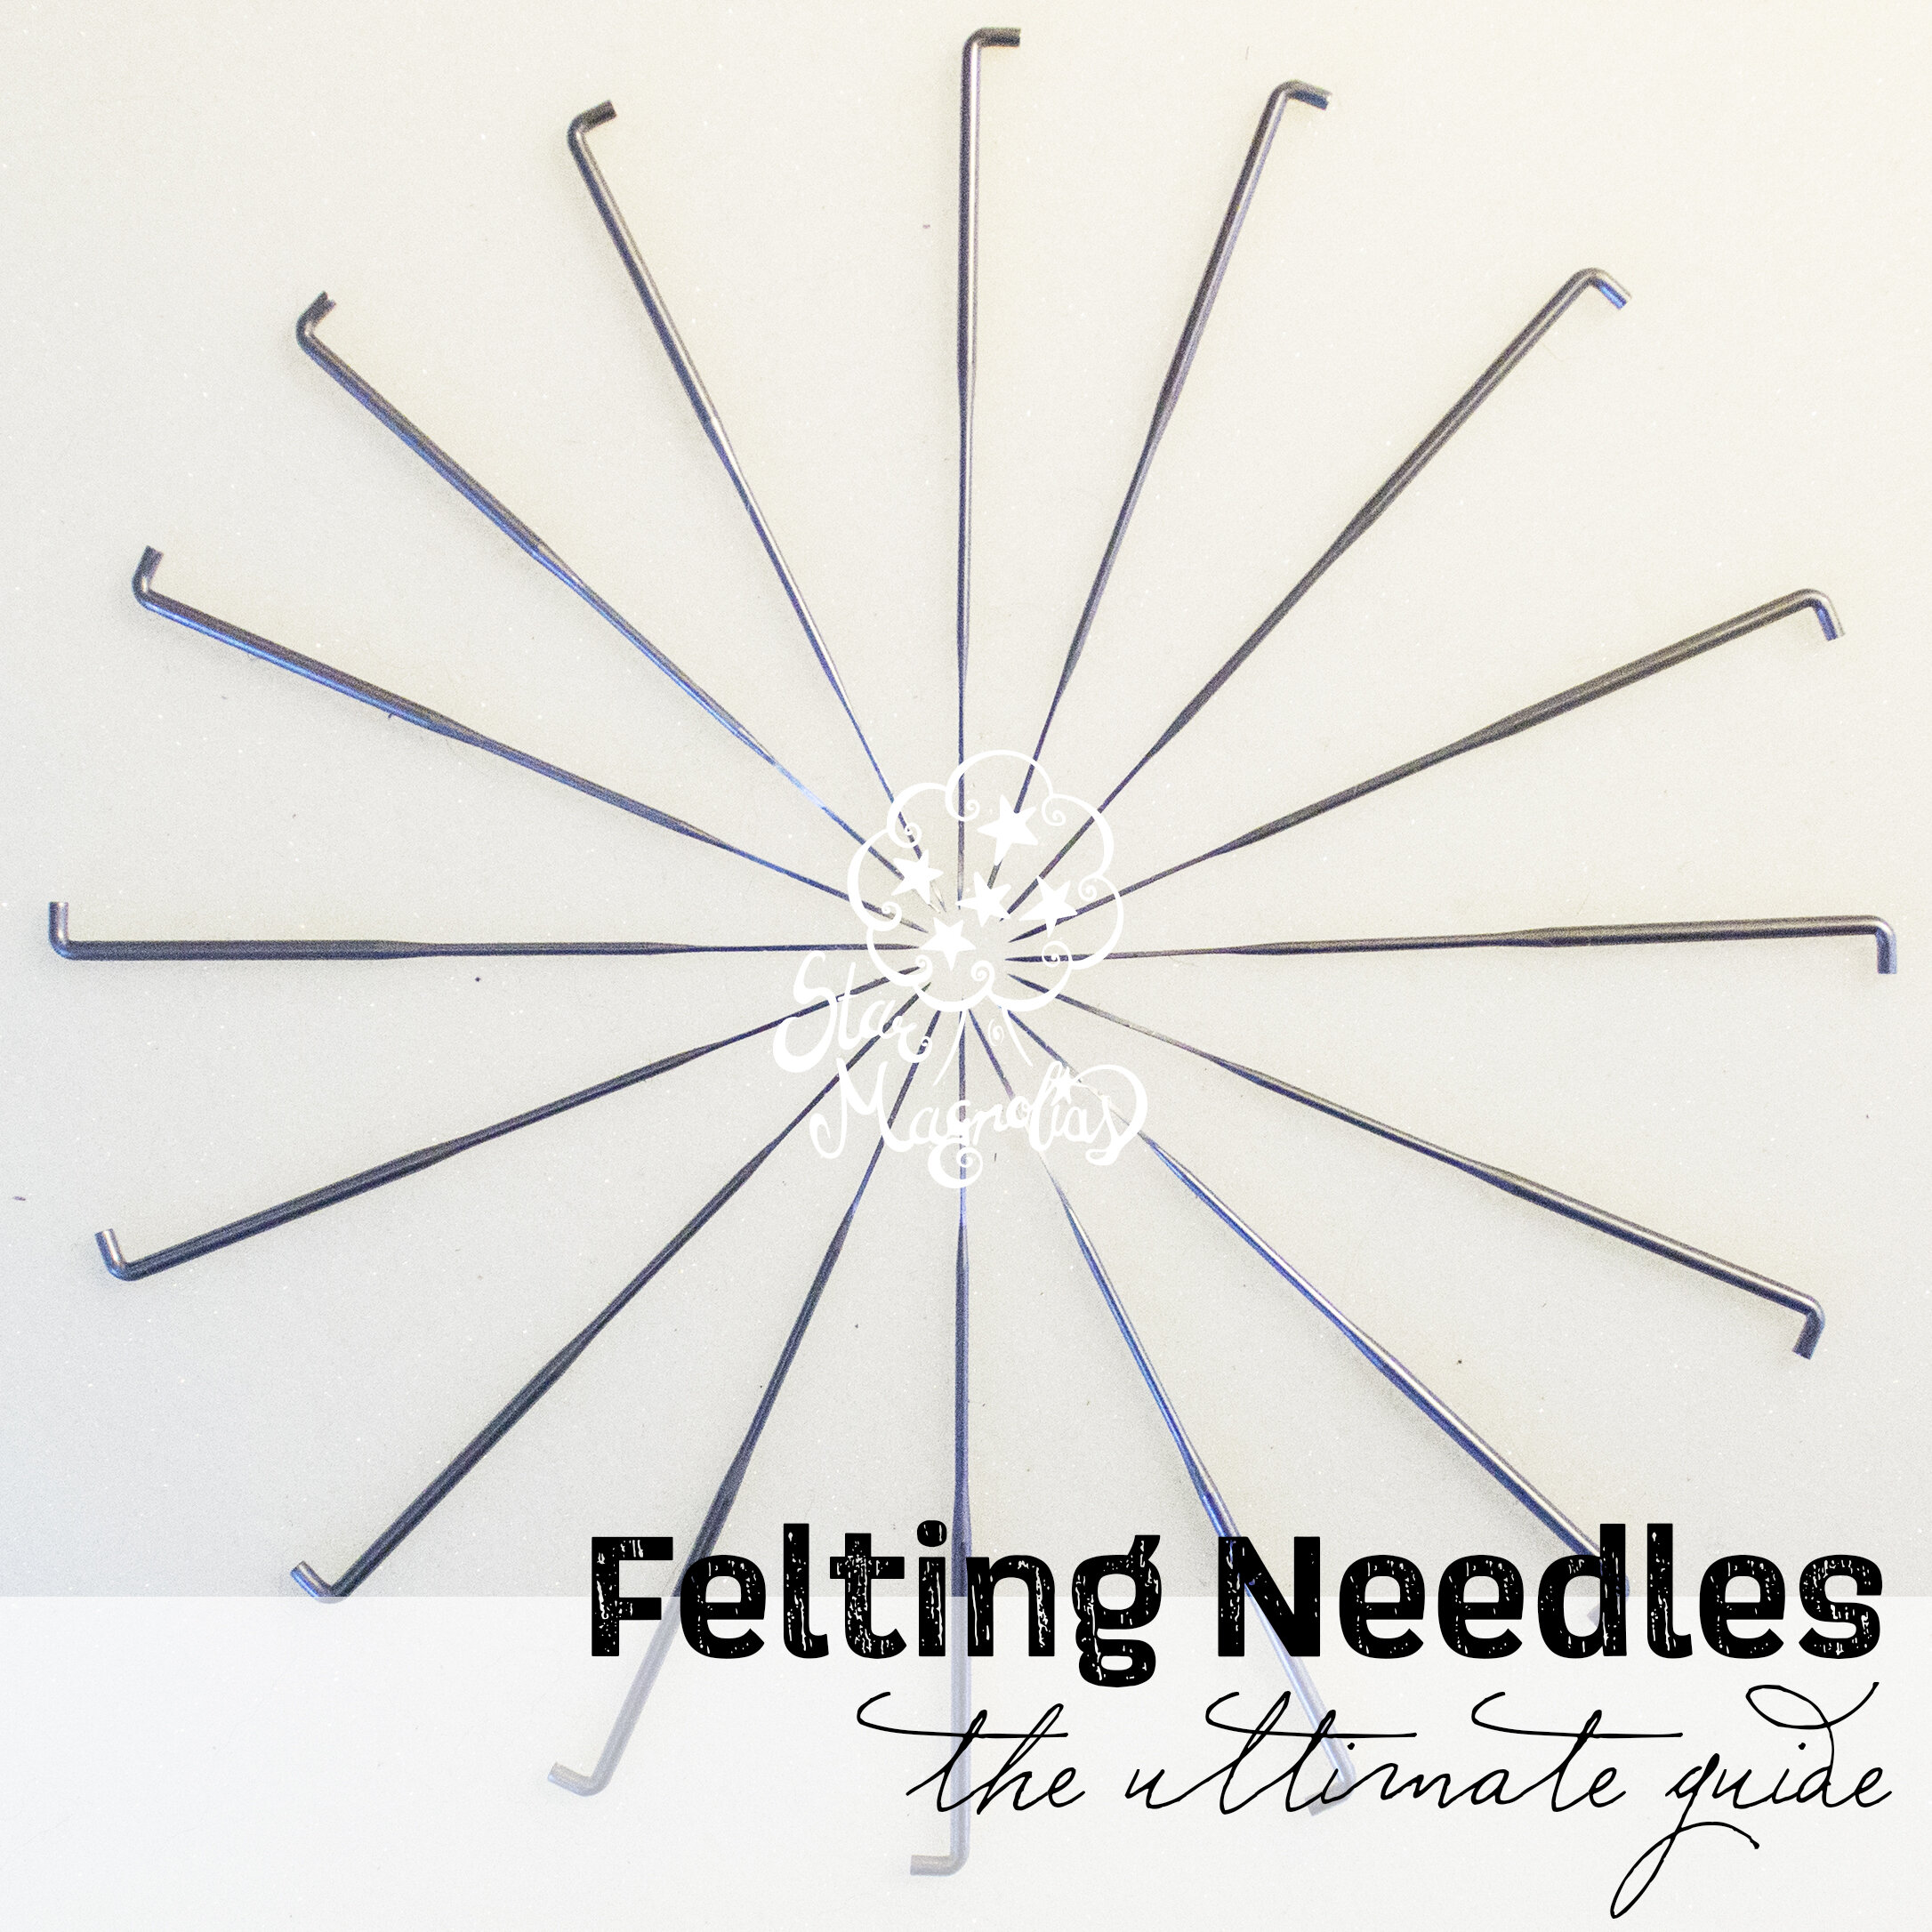 Reverse Felting Needles